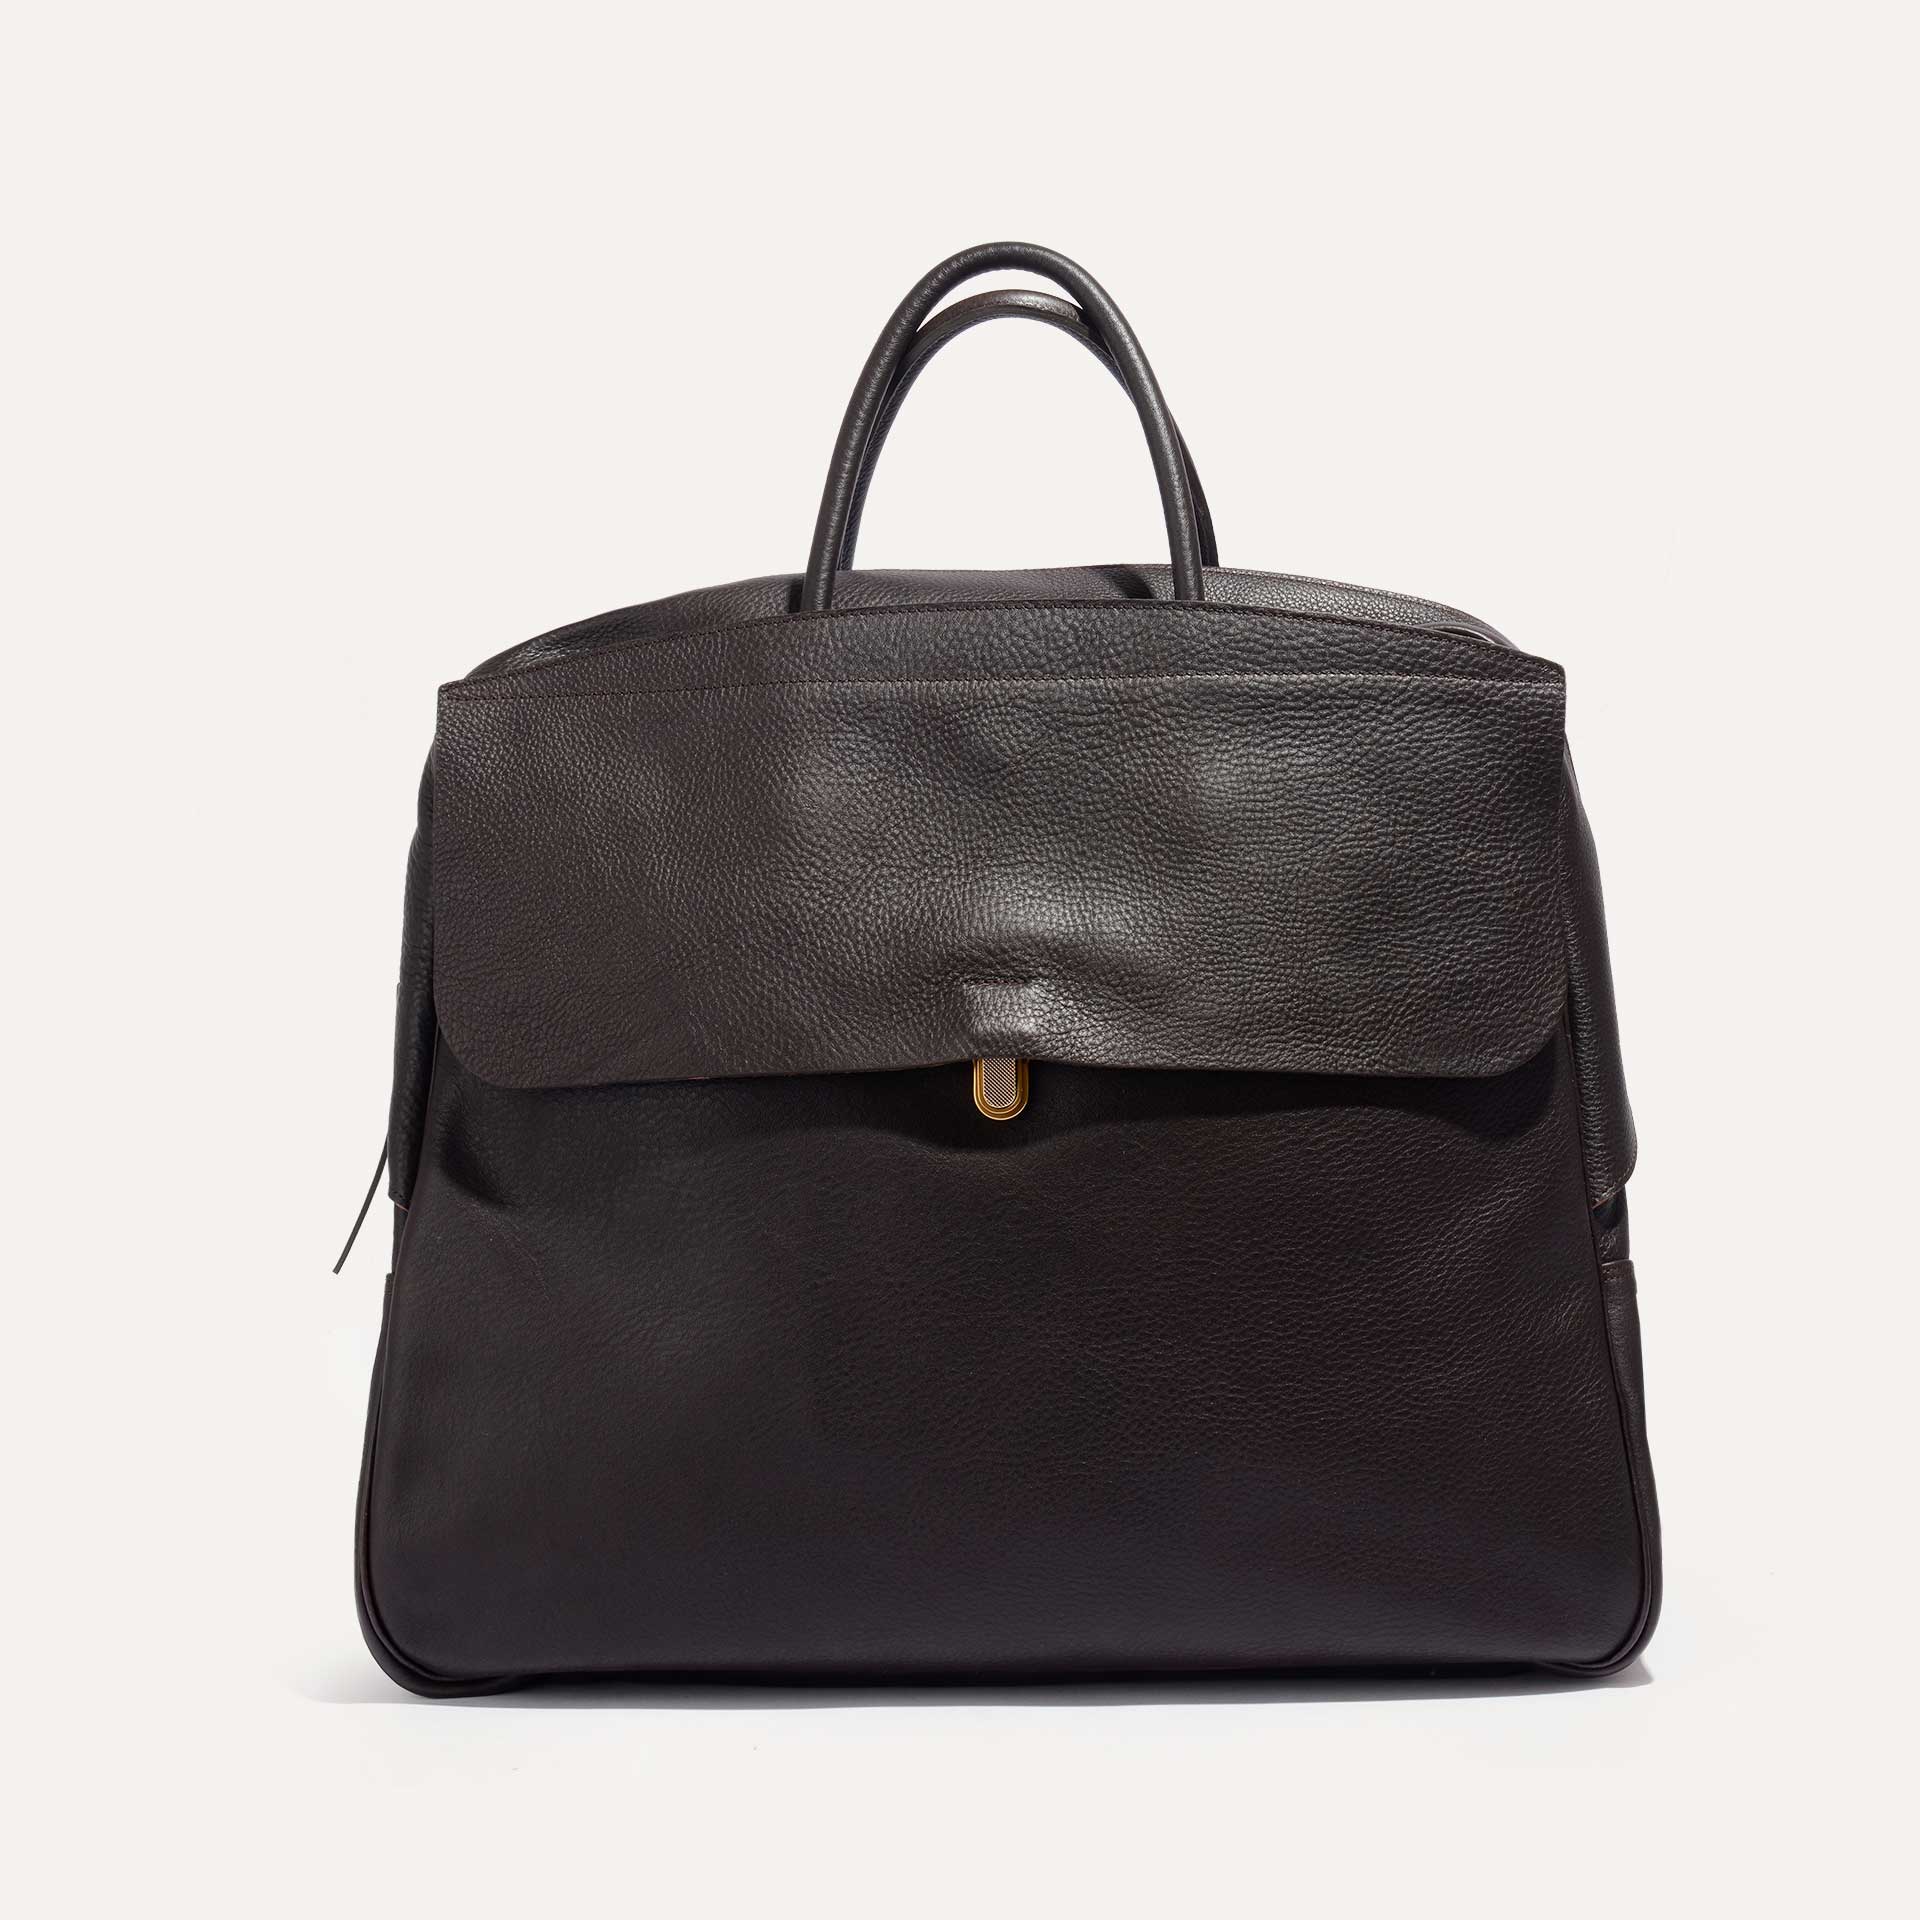 Men's leather travel bag